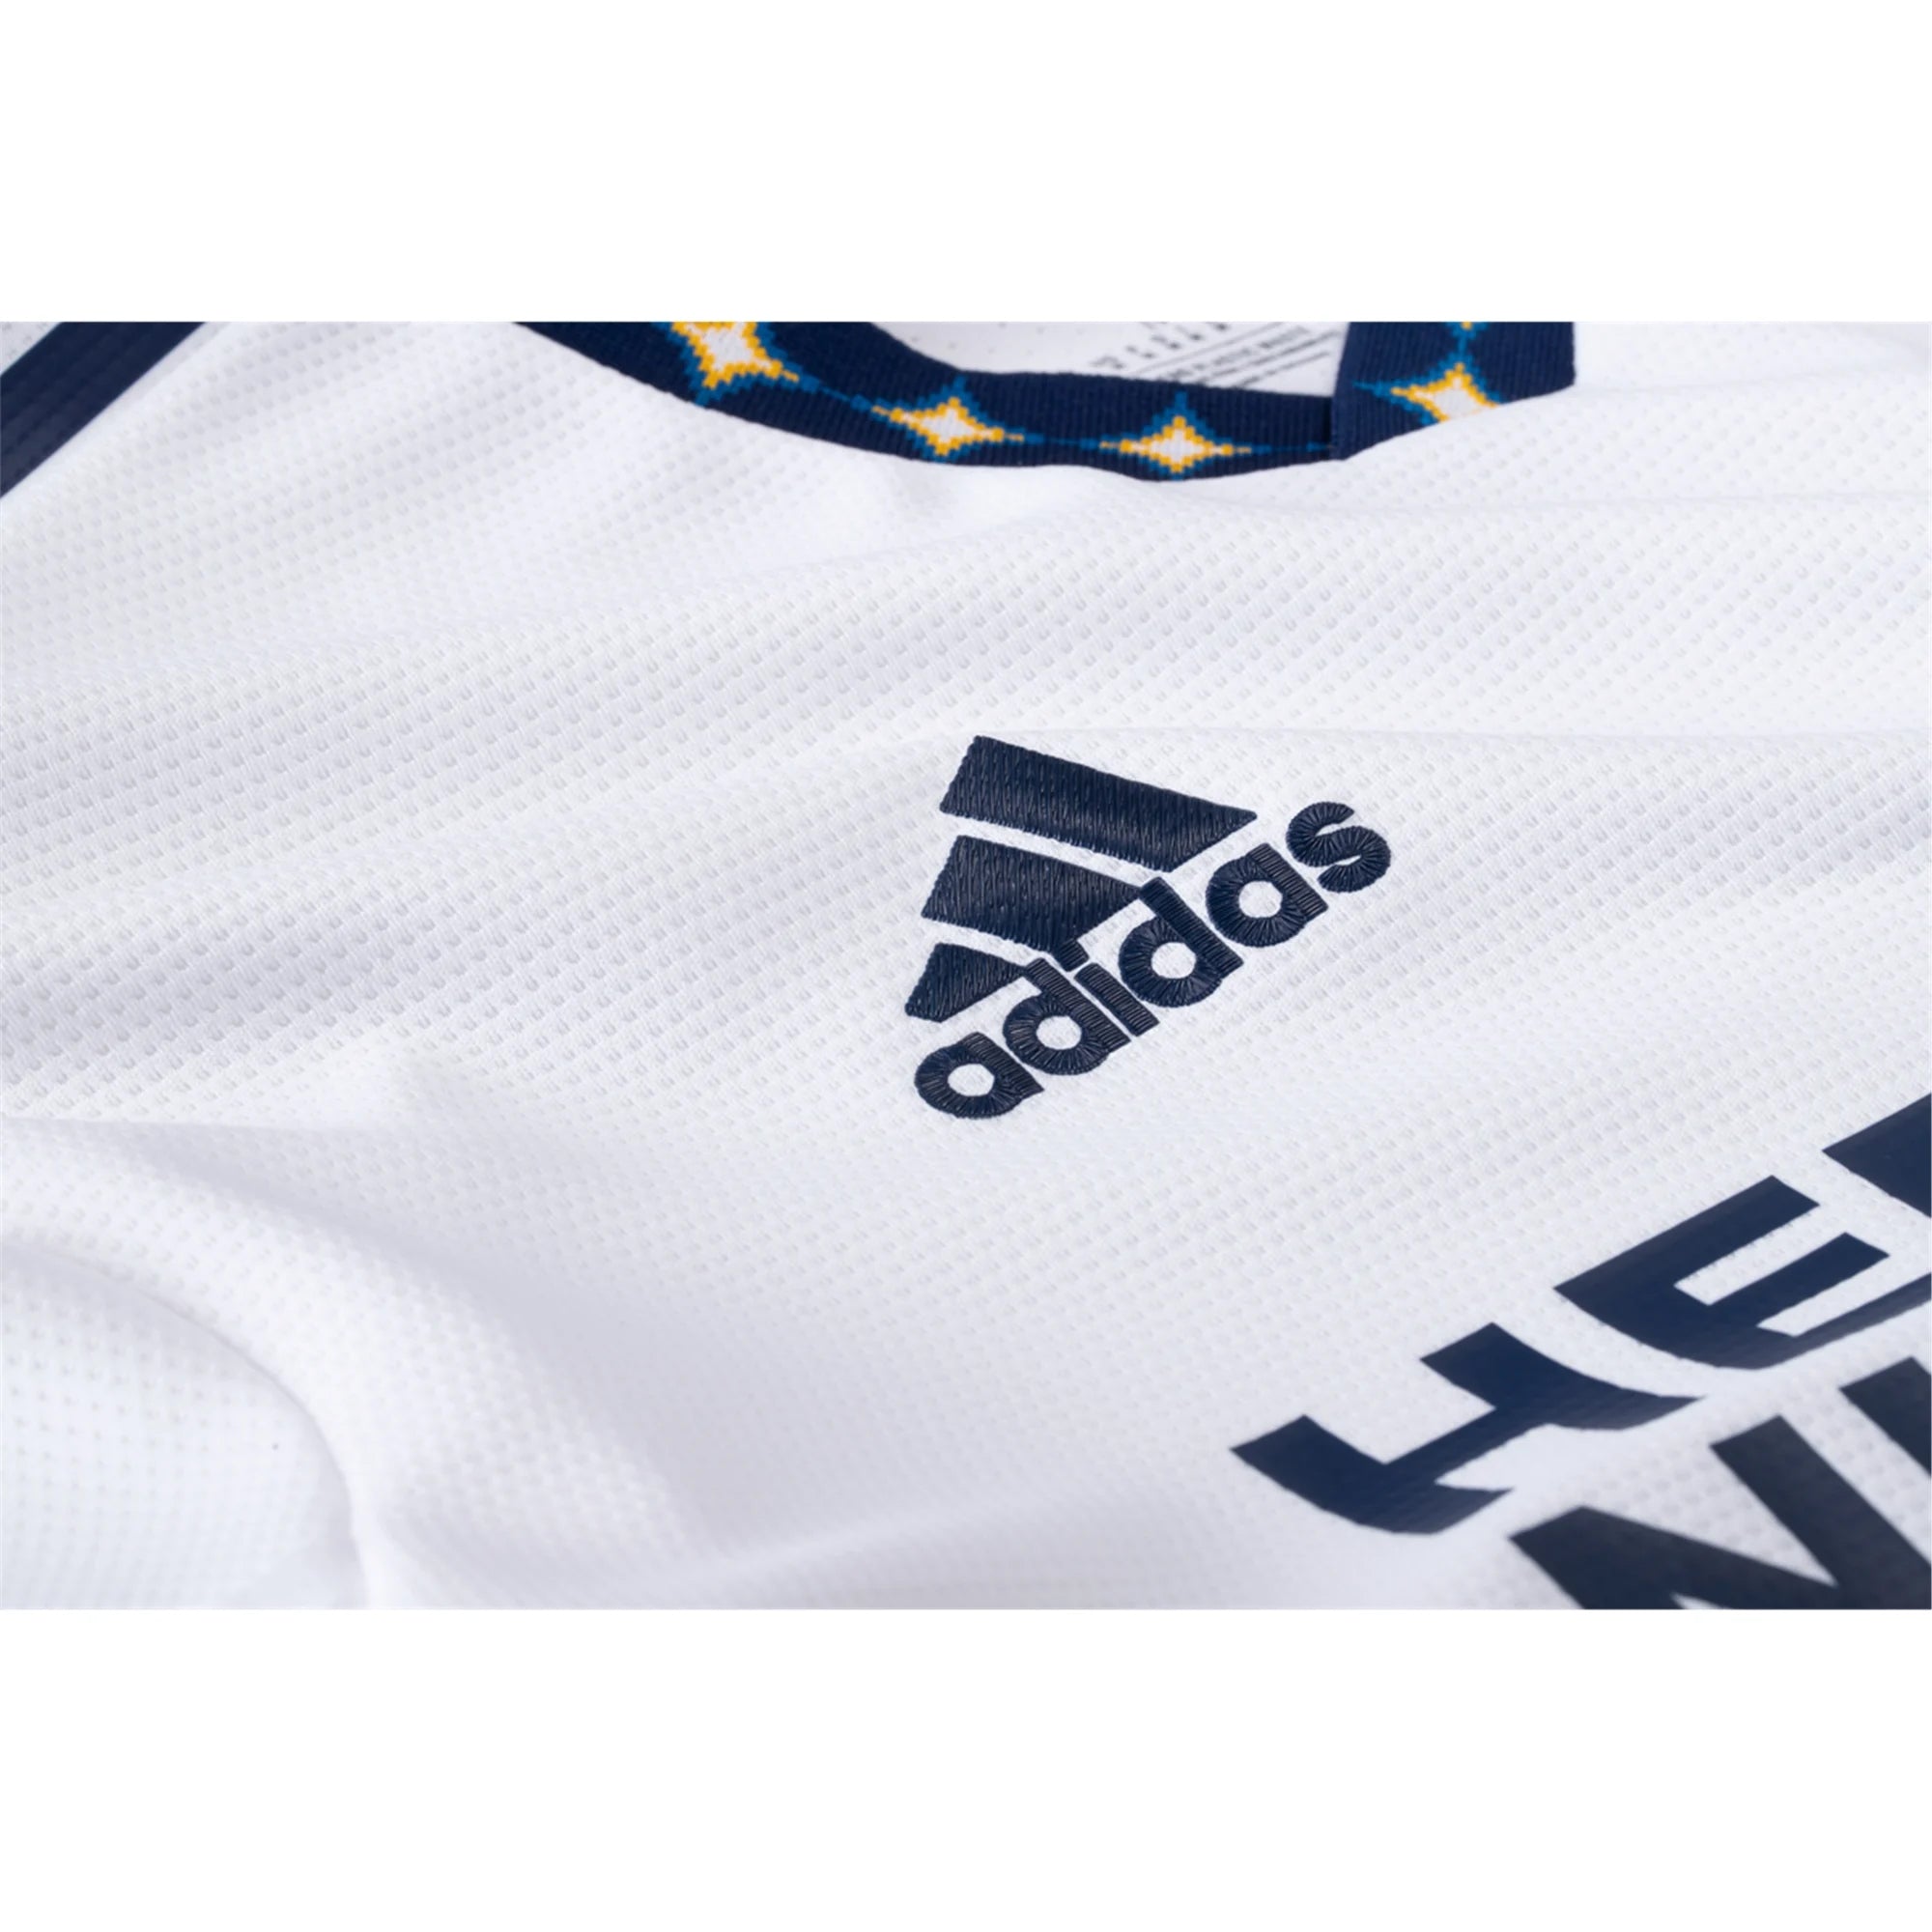 LA Galaxy 2022/23 adidas Home Jersey - FOOTBALL FASHION